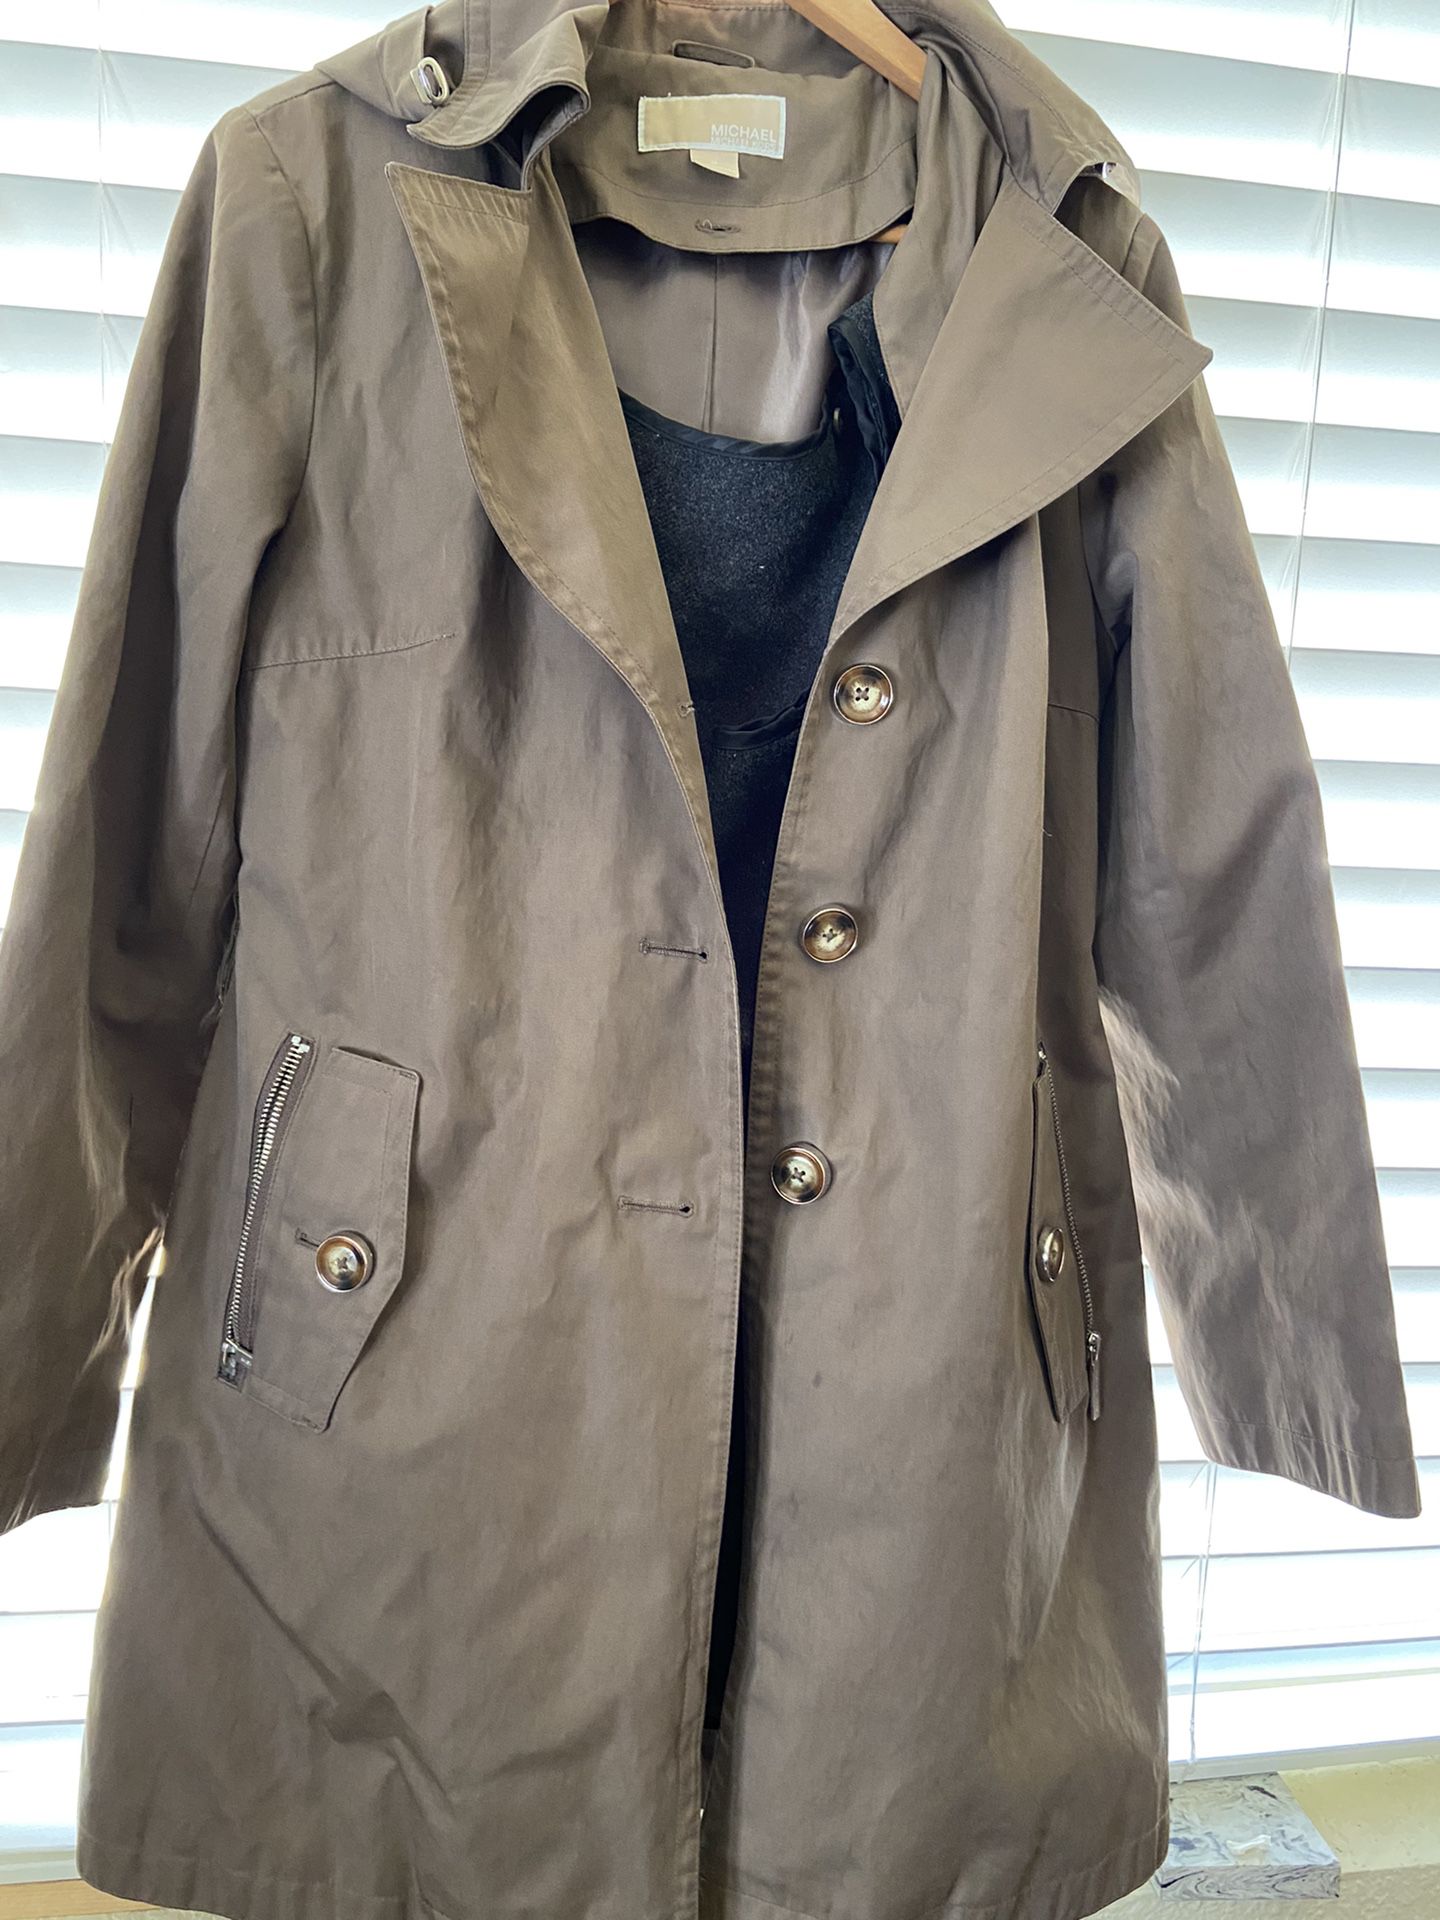 Michael Kors dressy lightweight coat